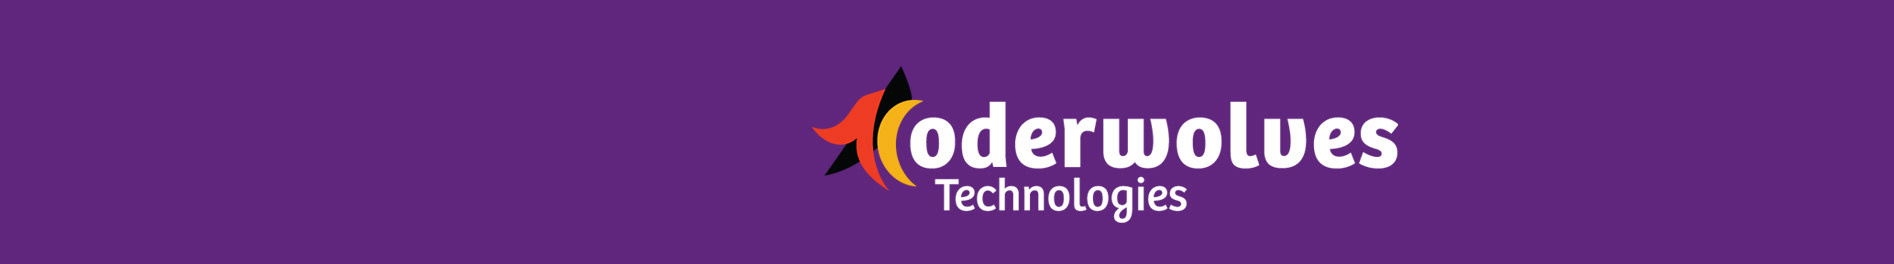 Banner de perfil de Coderwolves Technologies